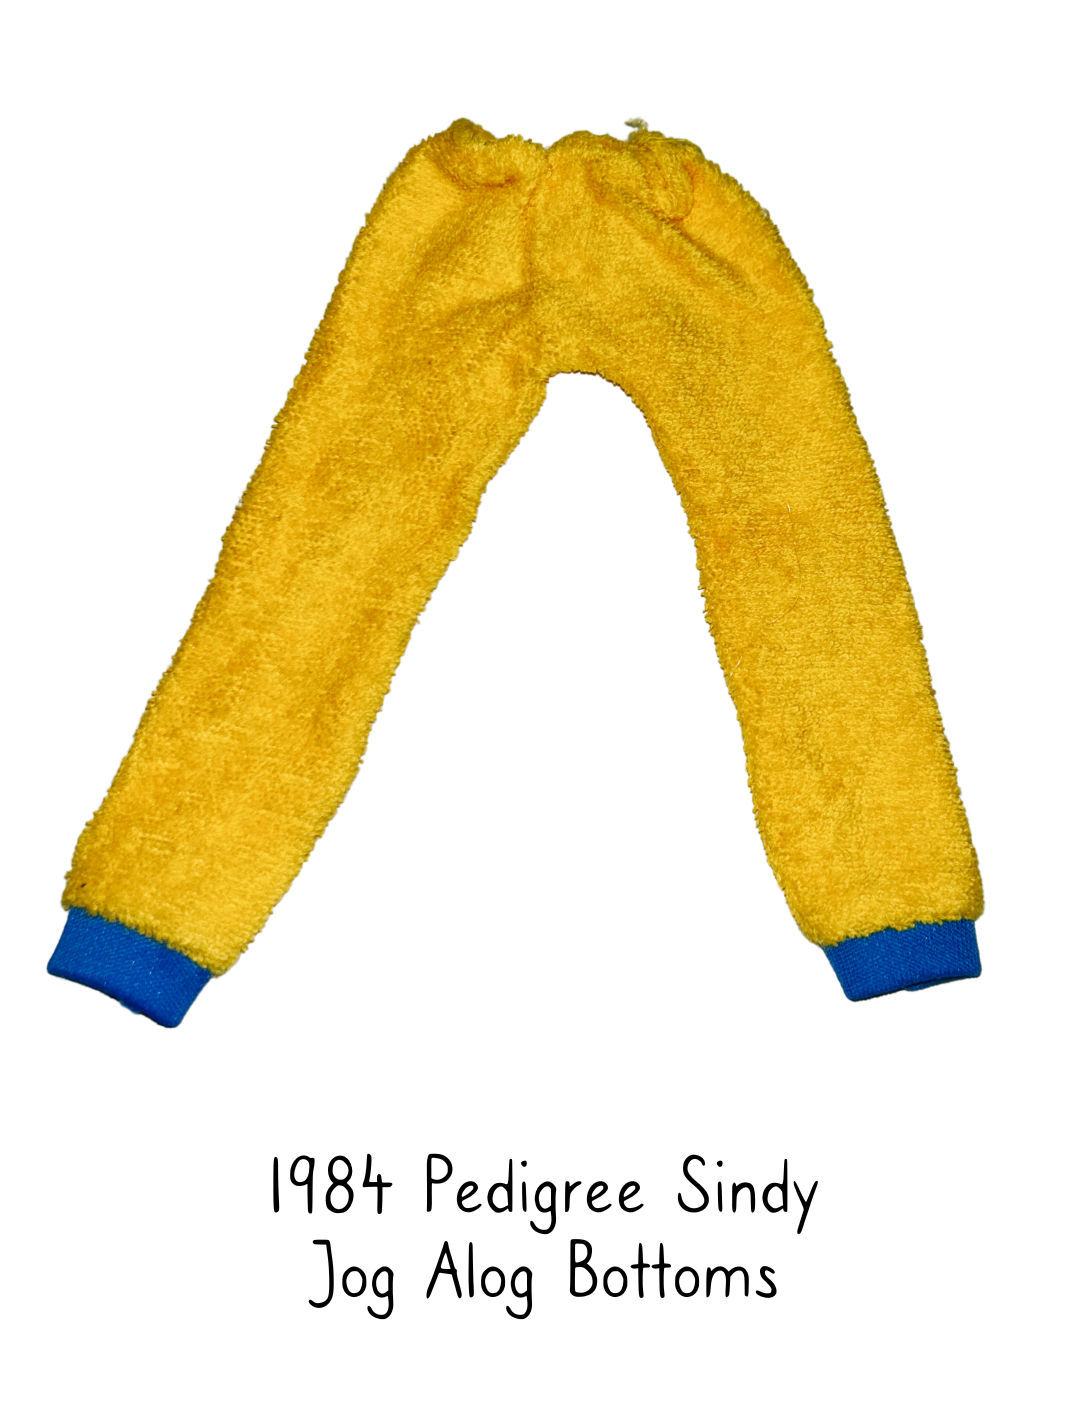 1984 Pedigree Sindy Fashion Doll Jog Along Tracksuit Bottoms